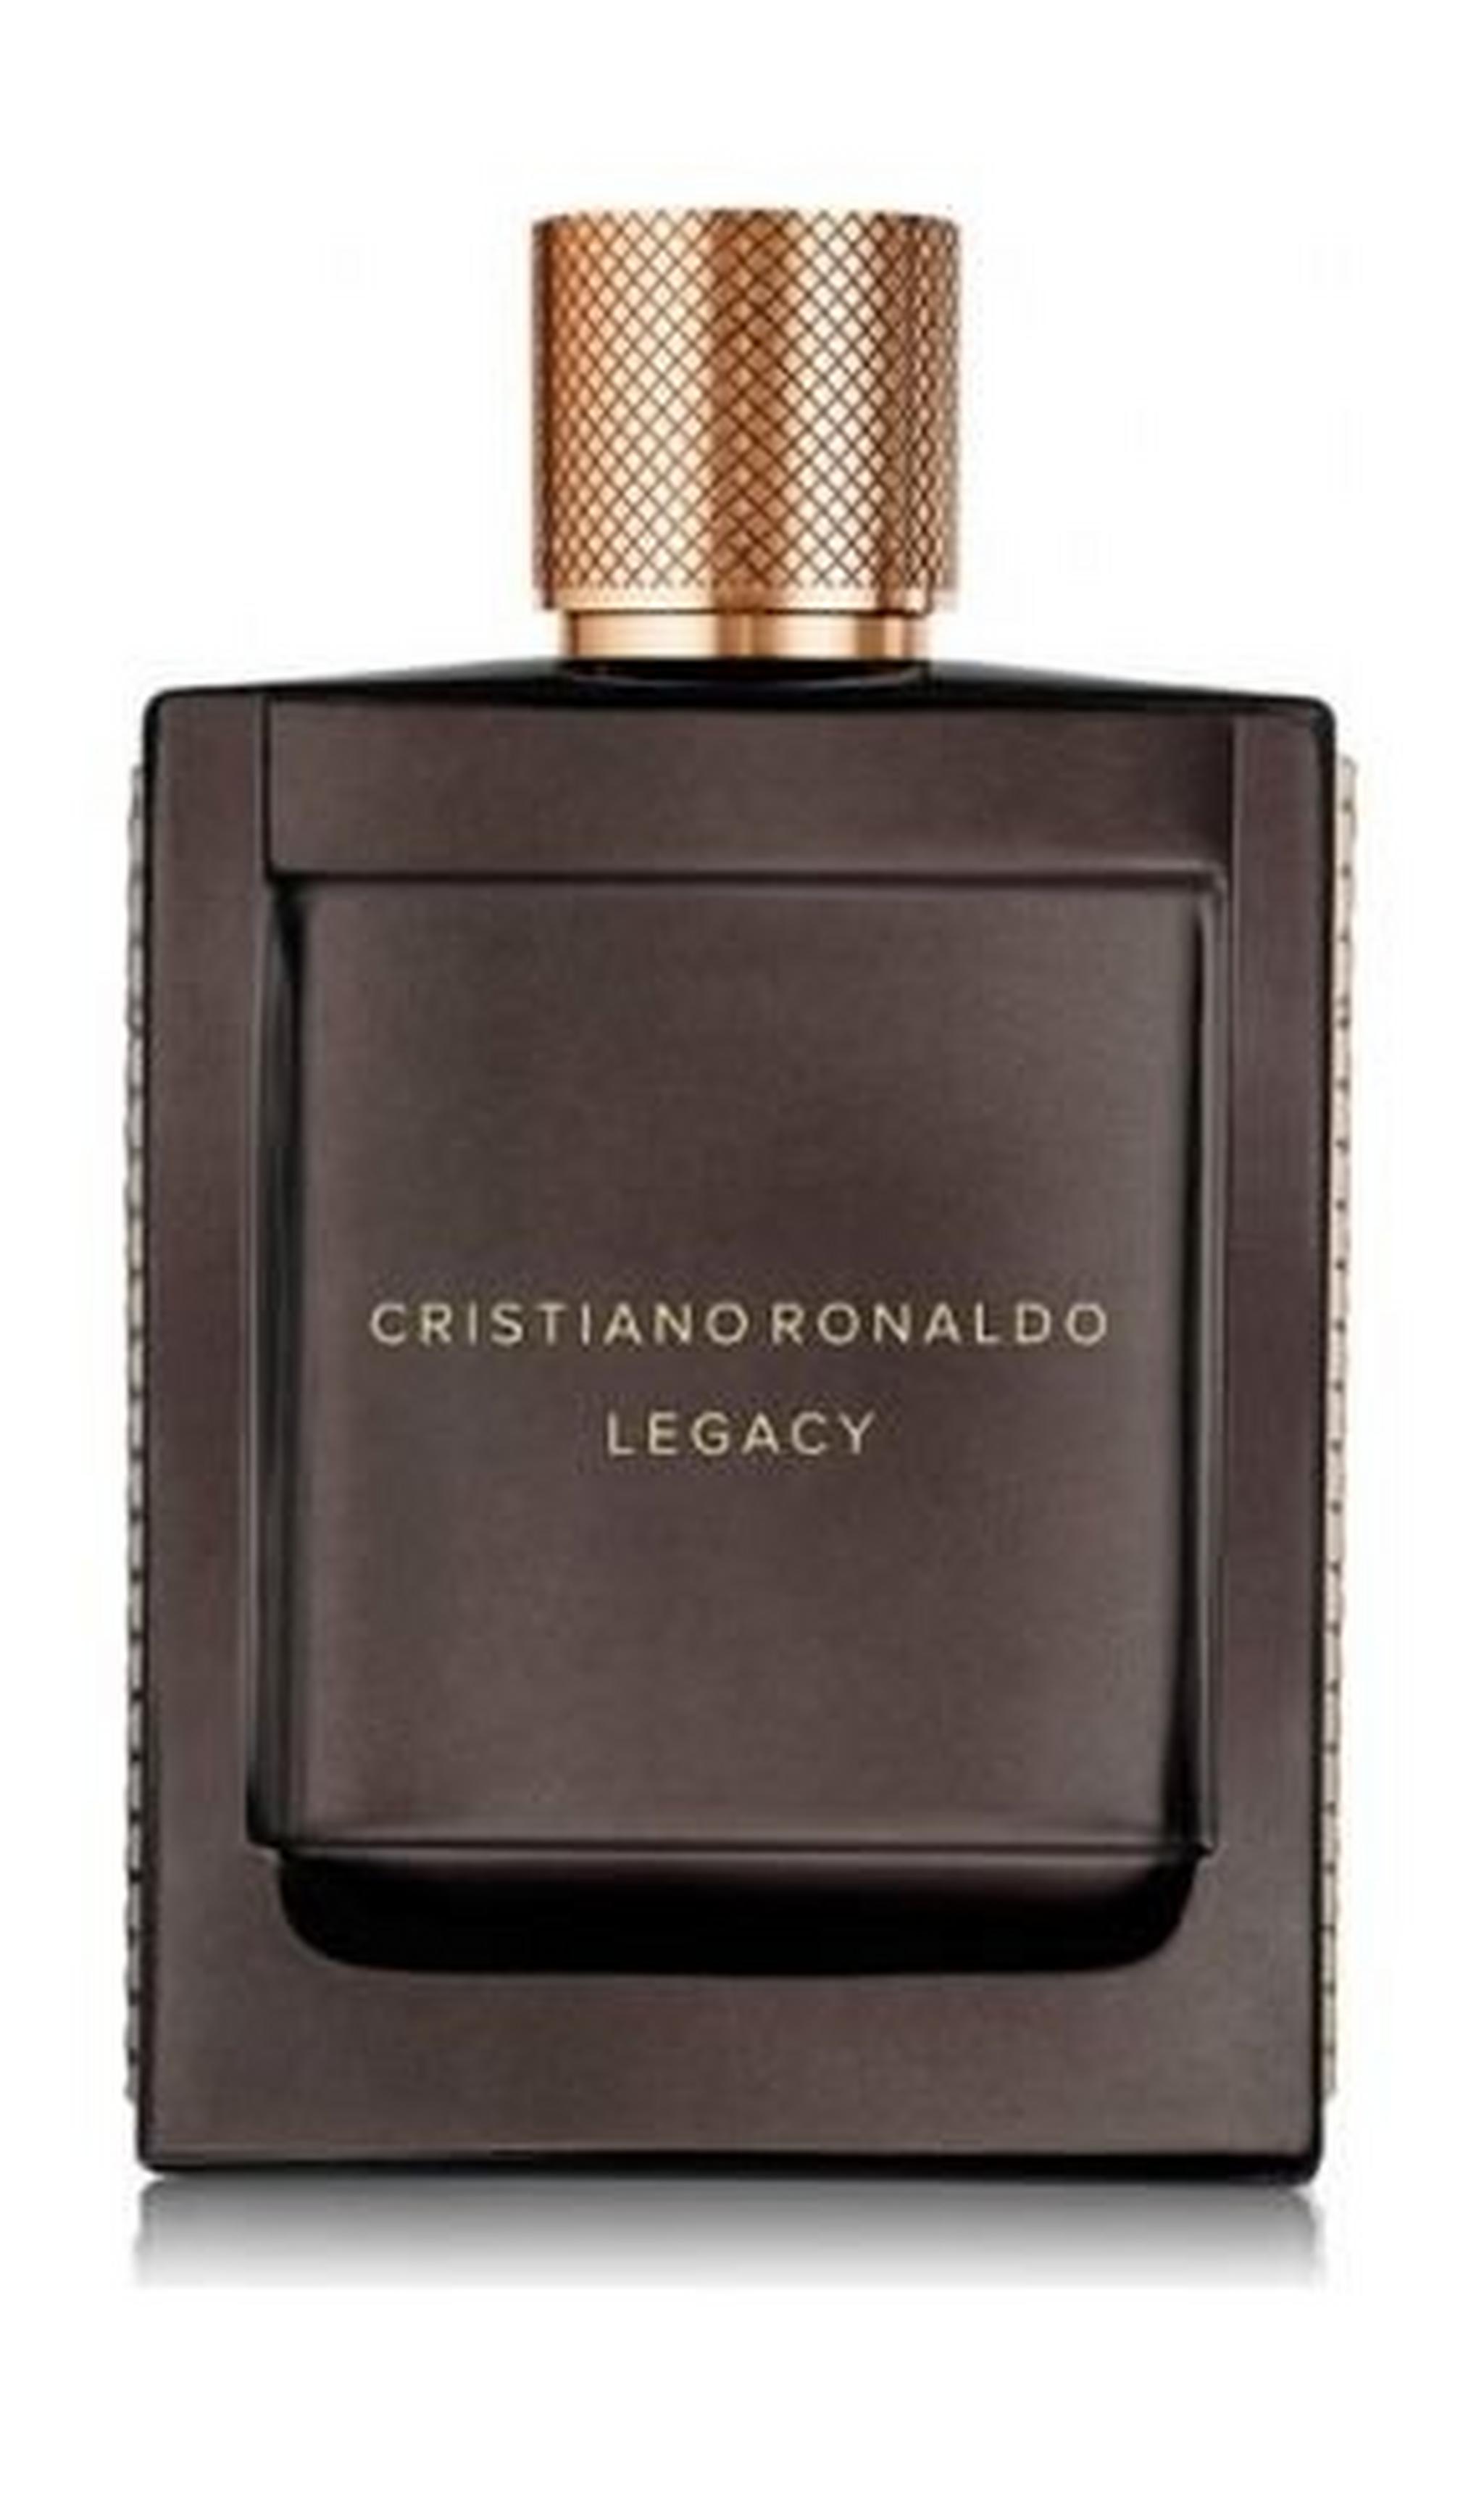 Legacy By Cristiano Ronaldo 100ml Men's Perfume